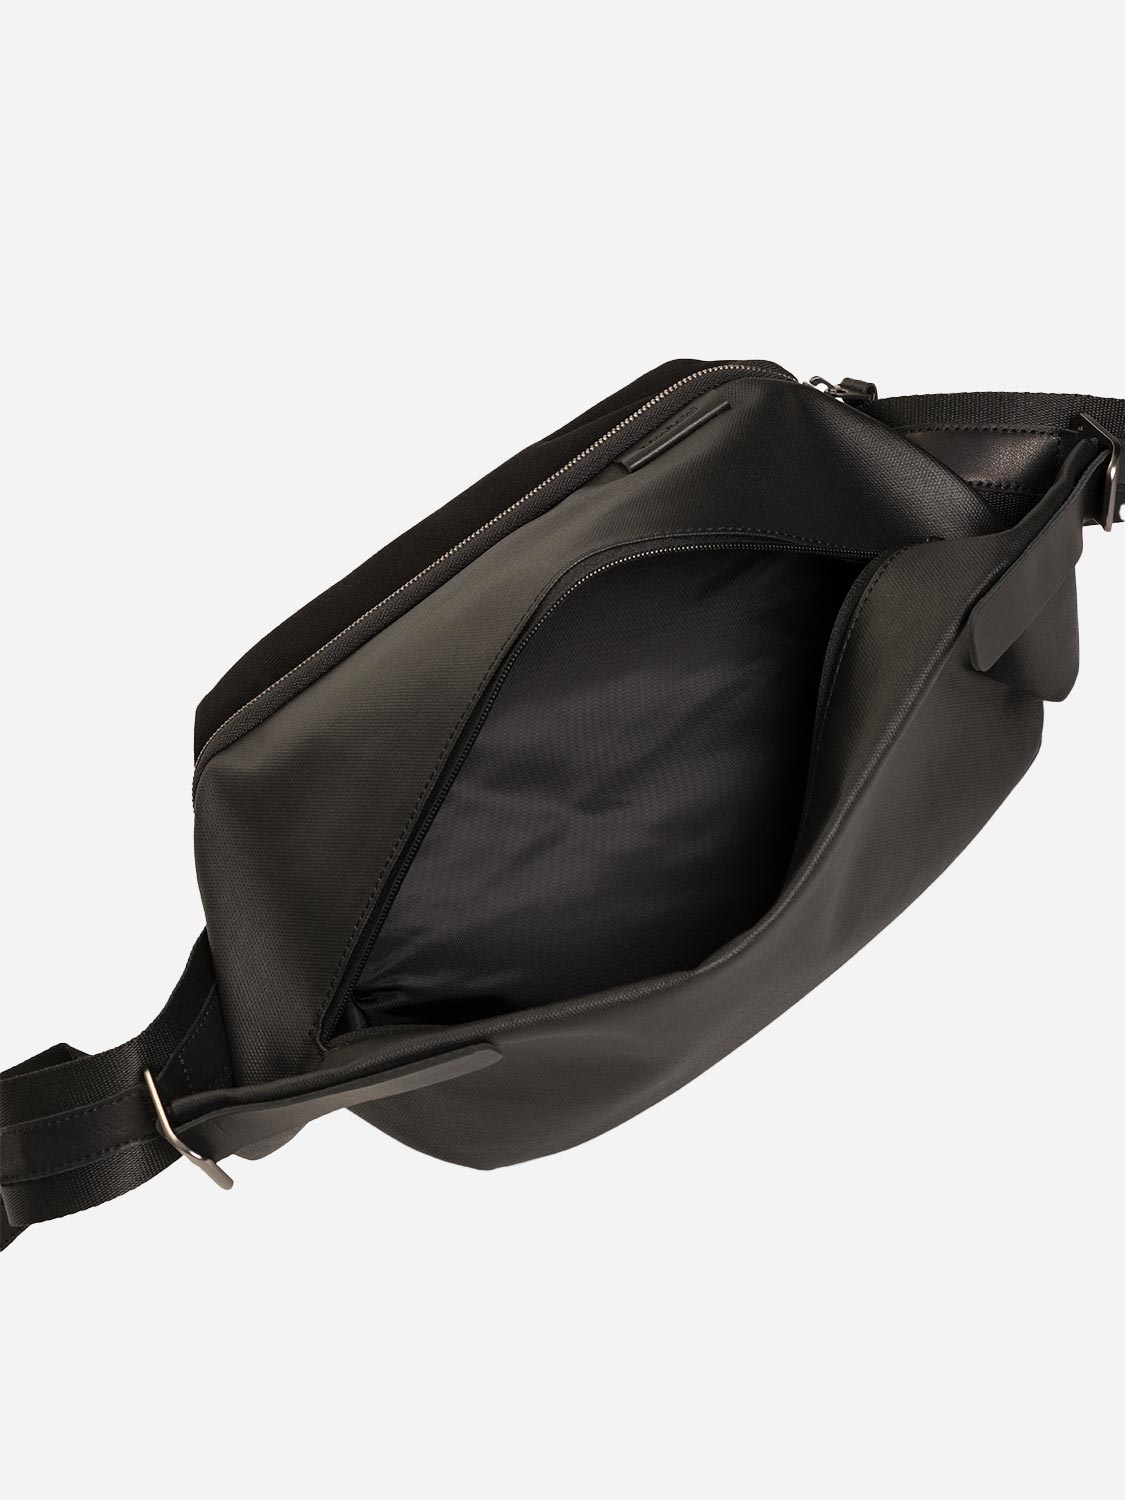  Cote&Ciel Inn Crossbody Bag  Black Coated Canvas - Medium :  Clothing, Shoes & Jewelry